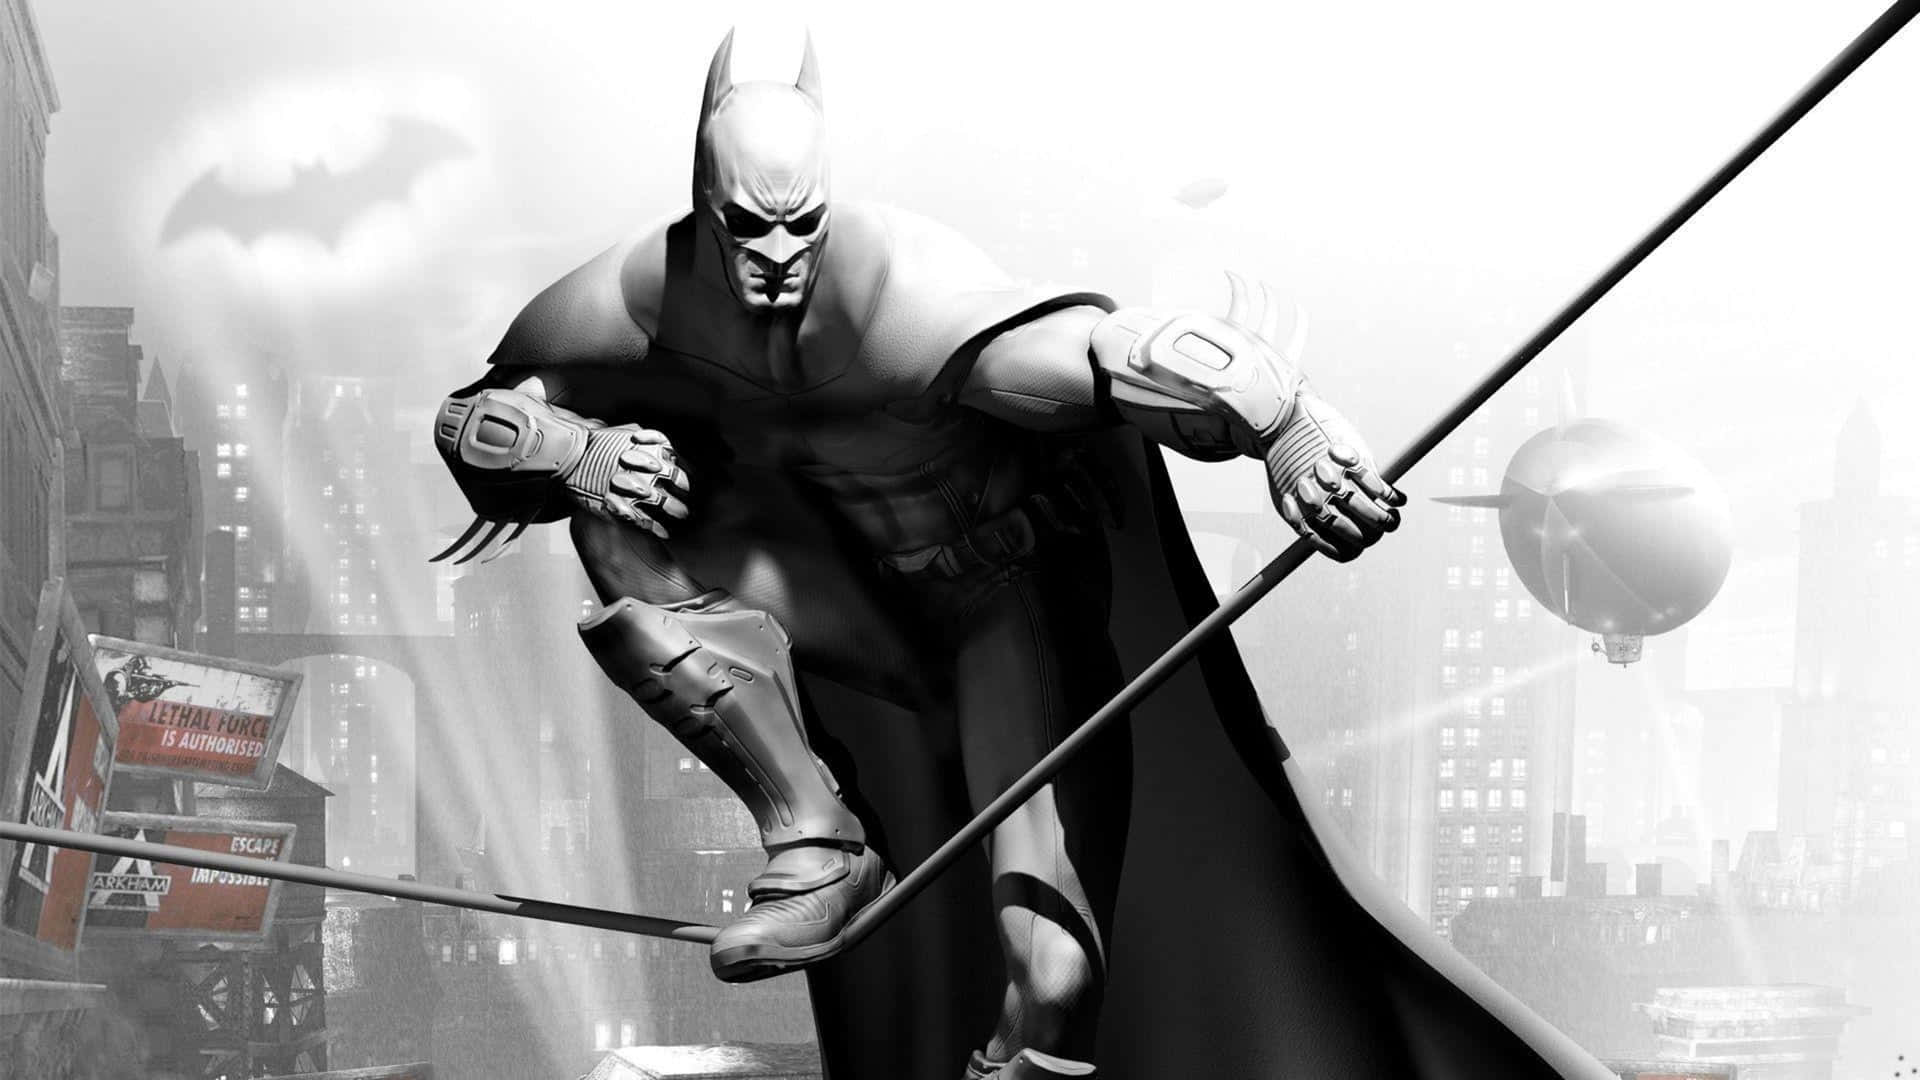 Batman: Arkham Knight wallpapers for desktop, download free Batman: Arkham  Knight pictures and backgrounds for PC